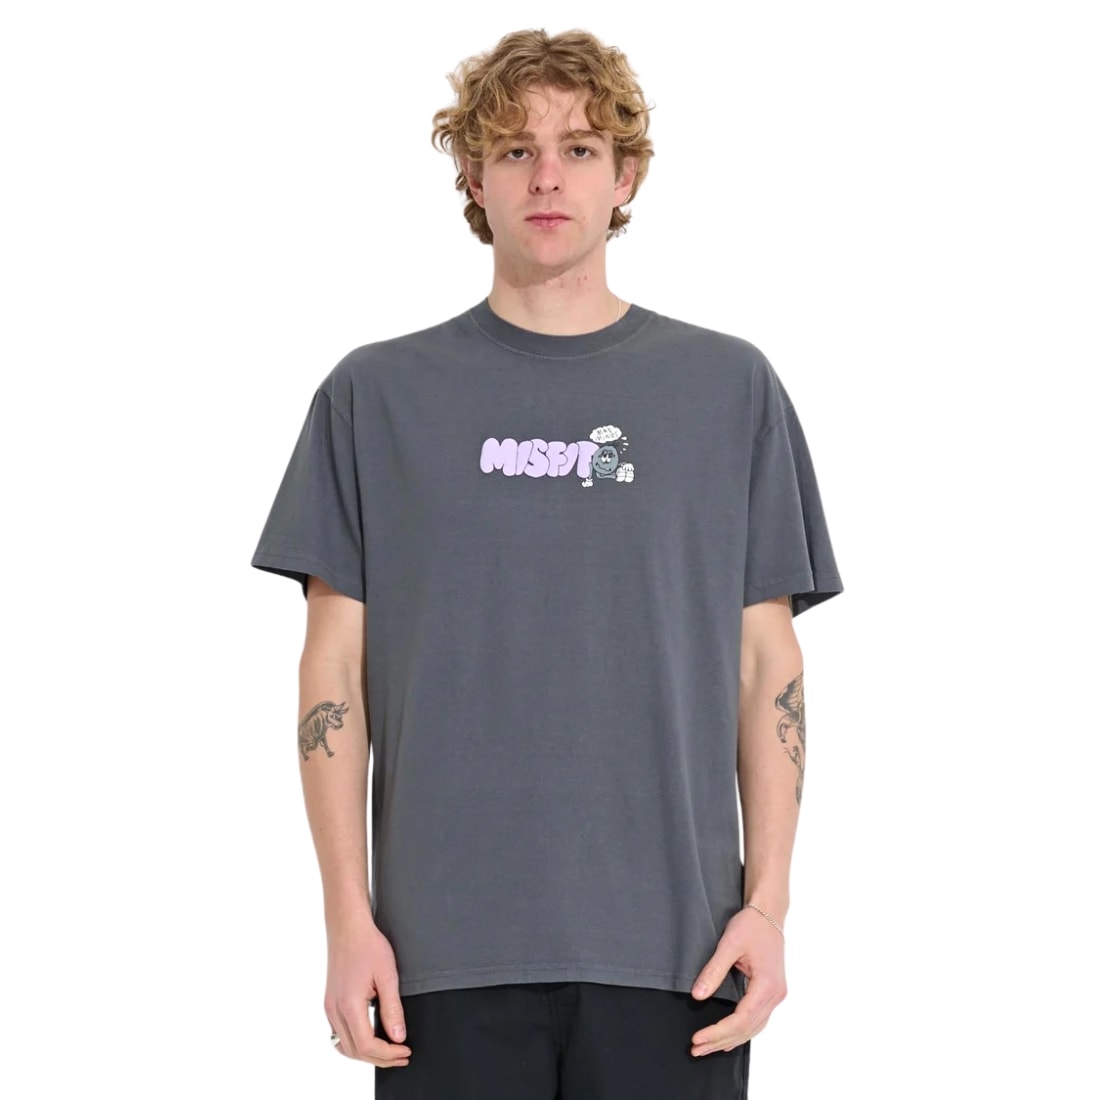 Misfit Loving Hopes T-Shirt - Pigment Petrol - Mens Graphic T-Shirt by Misfit